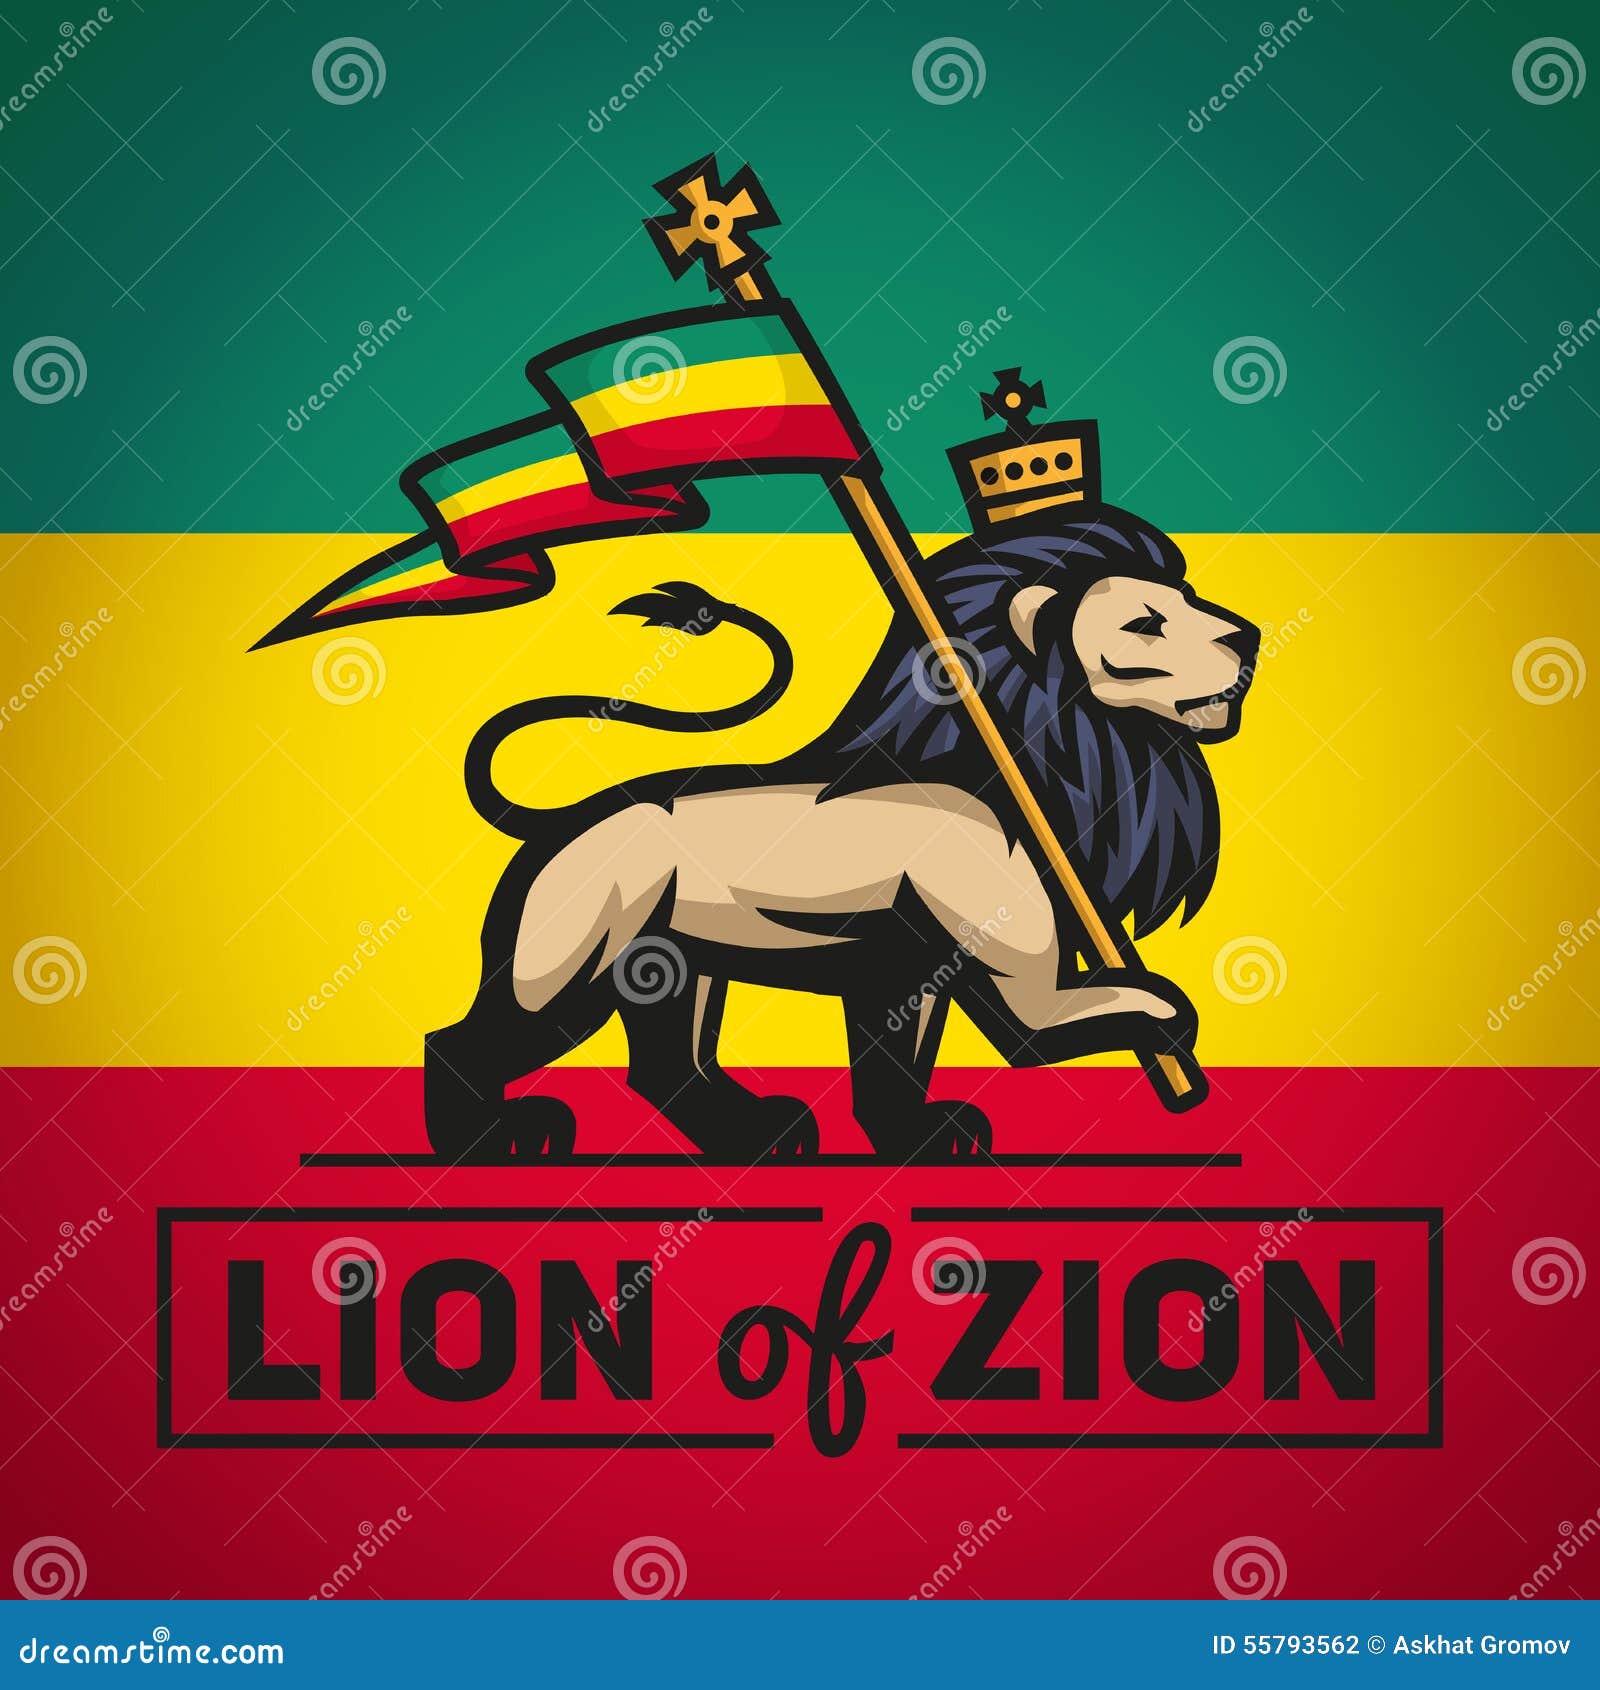 judah lion with a rastafari flag. king of zion